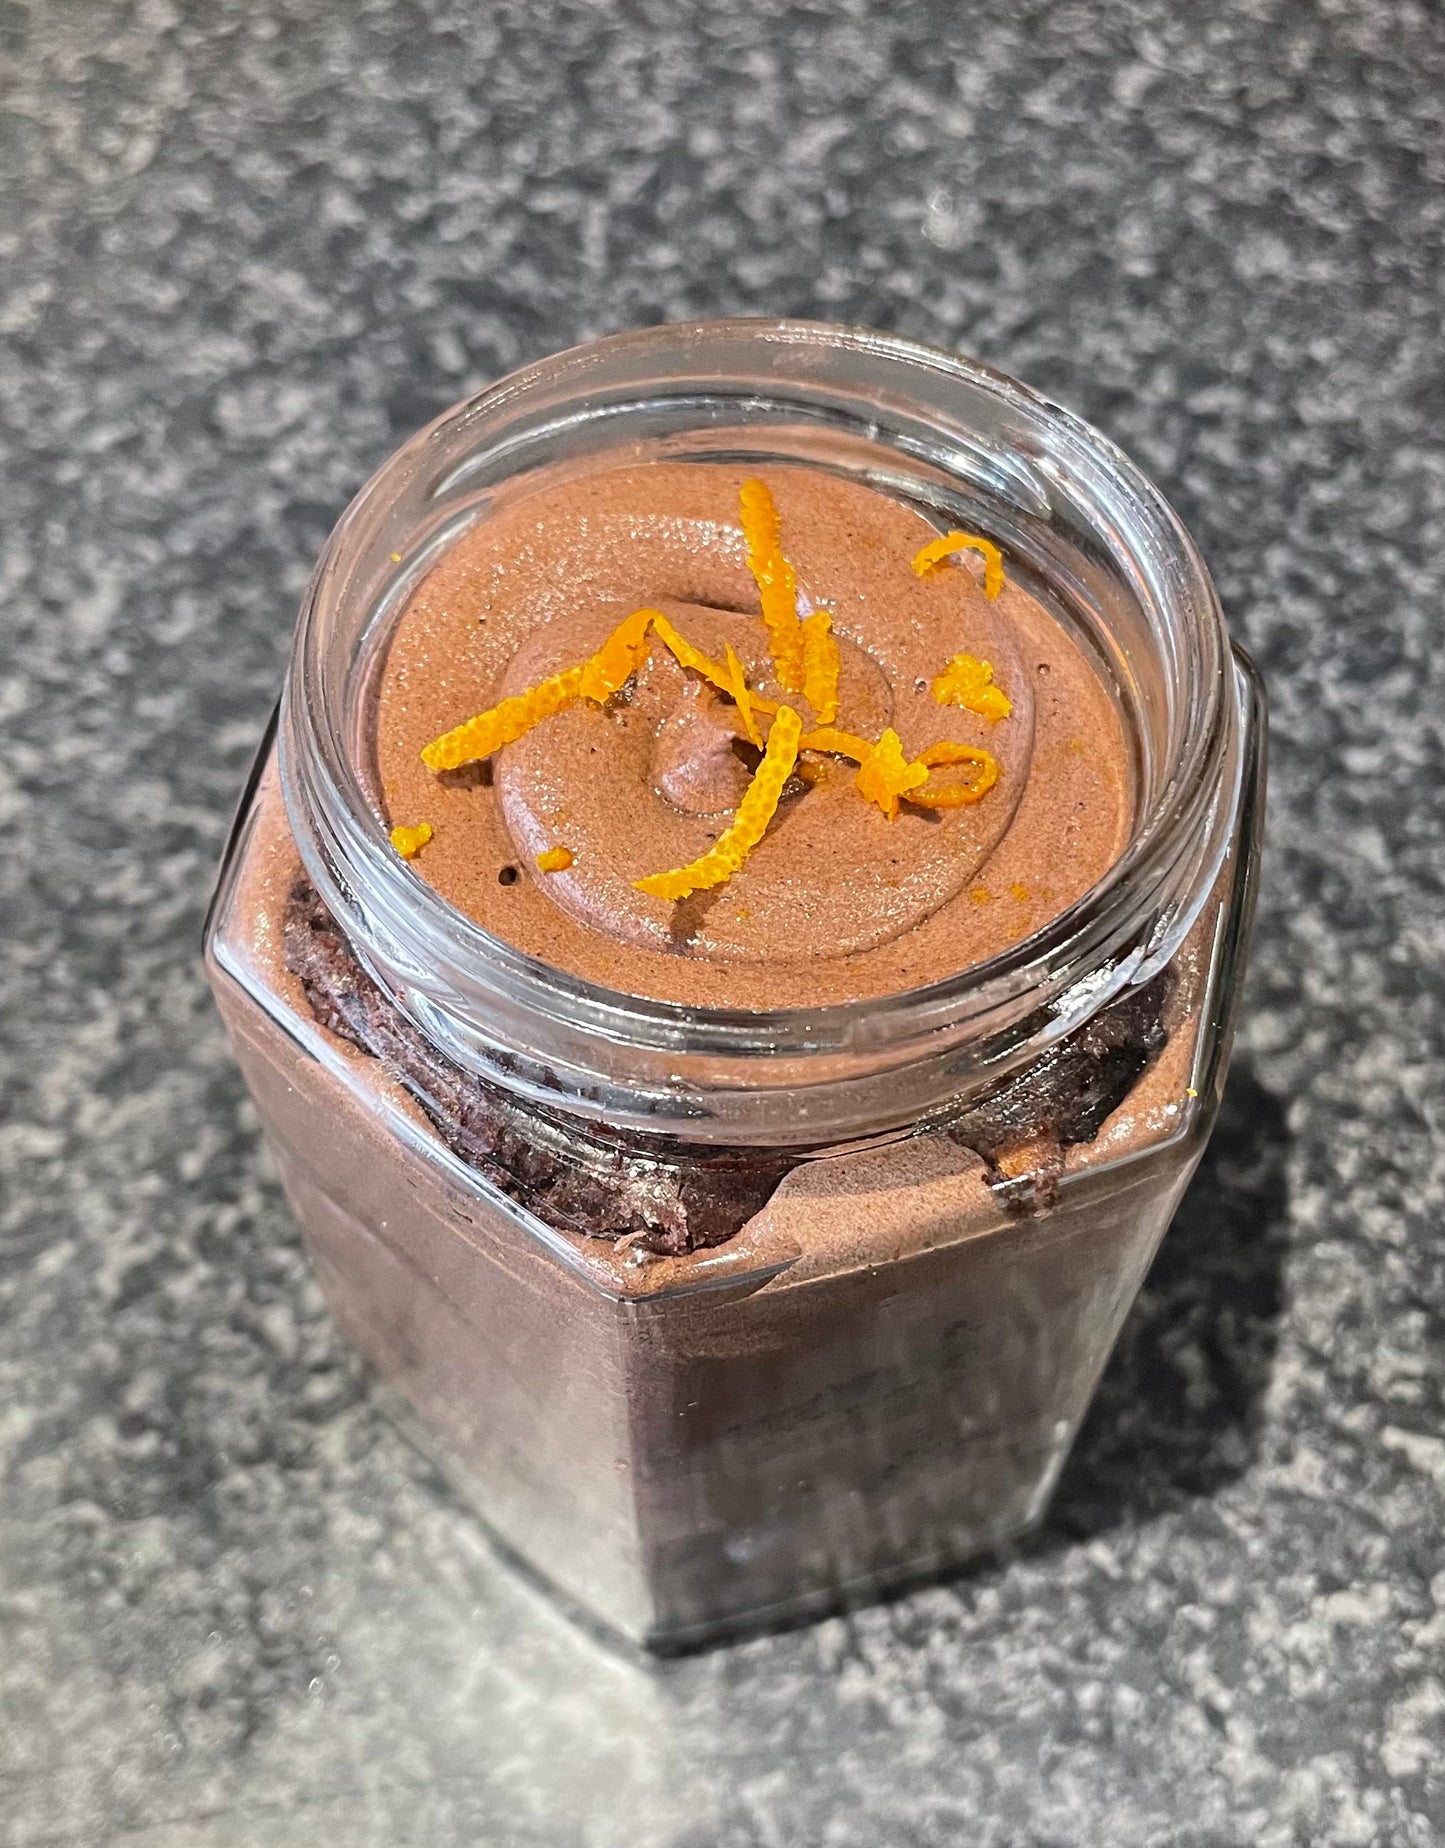 Vegan chocolate orange sponge Medium Cake Jars